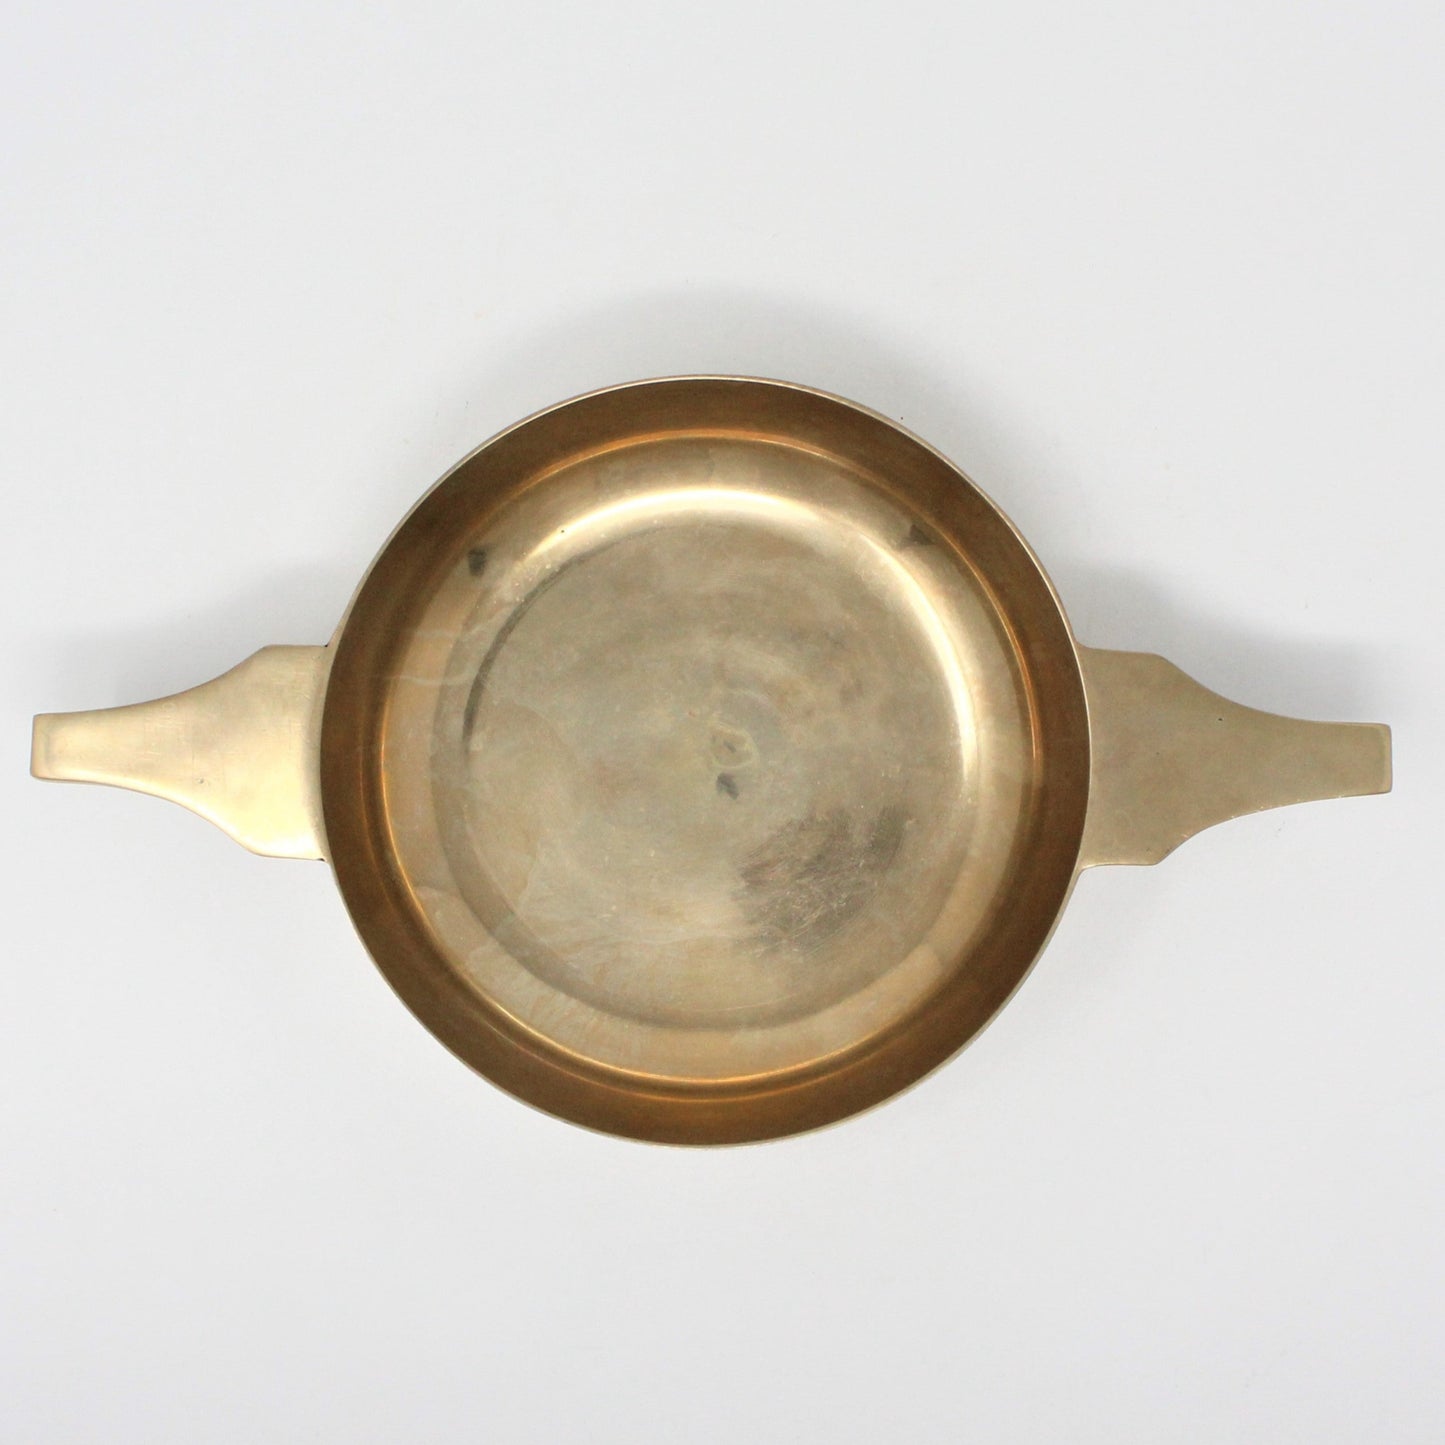 Drinking Handled Ceremonial Bowl, Scottish Quaich, Brass, Vintage, 20oz